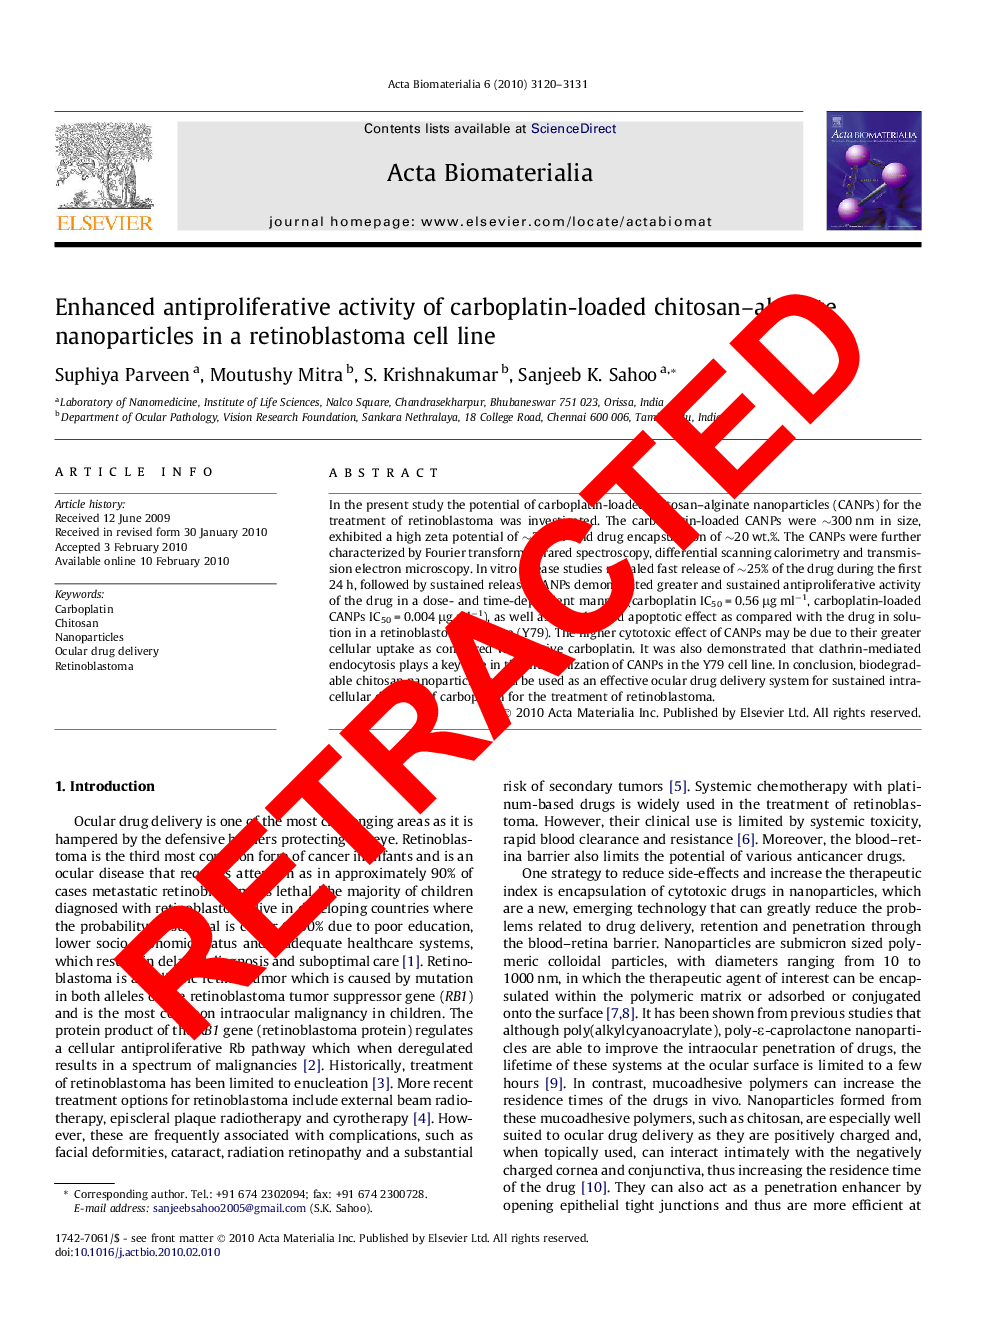 Retraction notice to ``Enhanced Antiproliferative Activity of Carboplatin loaded Chitosan-Alginate Nanoparticles in Retinoblastoma Cell Line’’ [Acta Biomaterialia 6 (2010) 3120–3131]